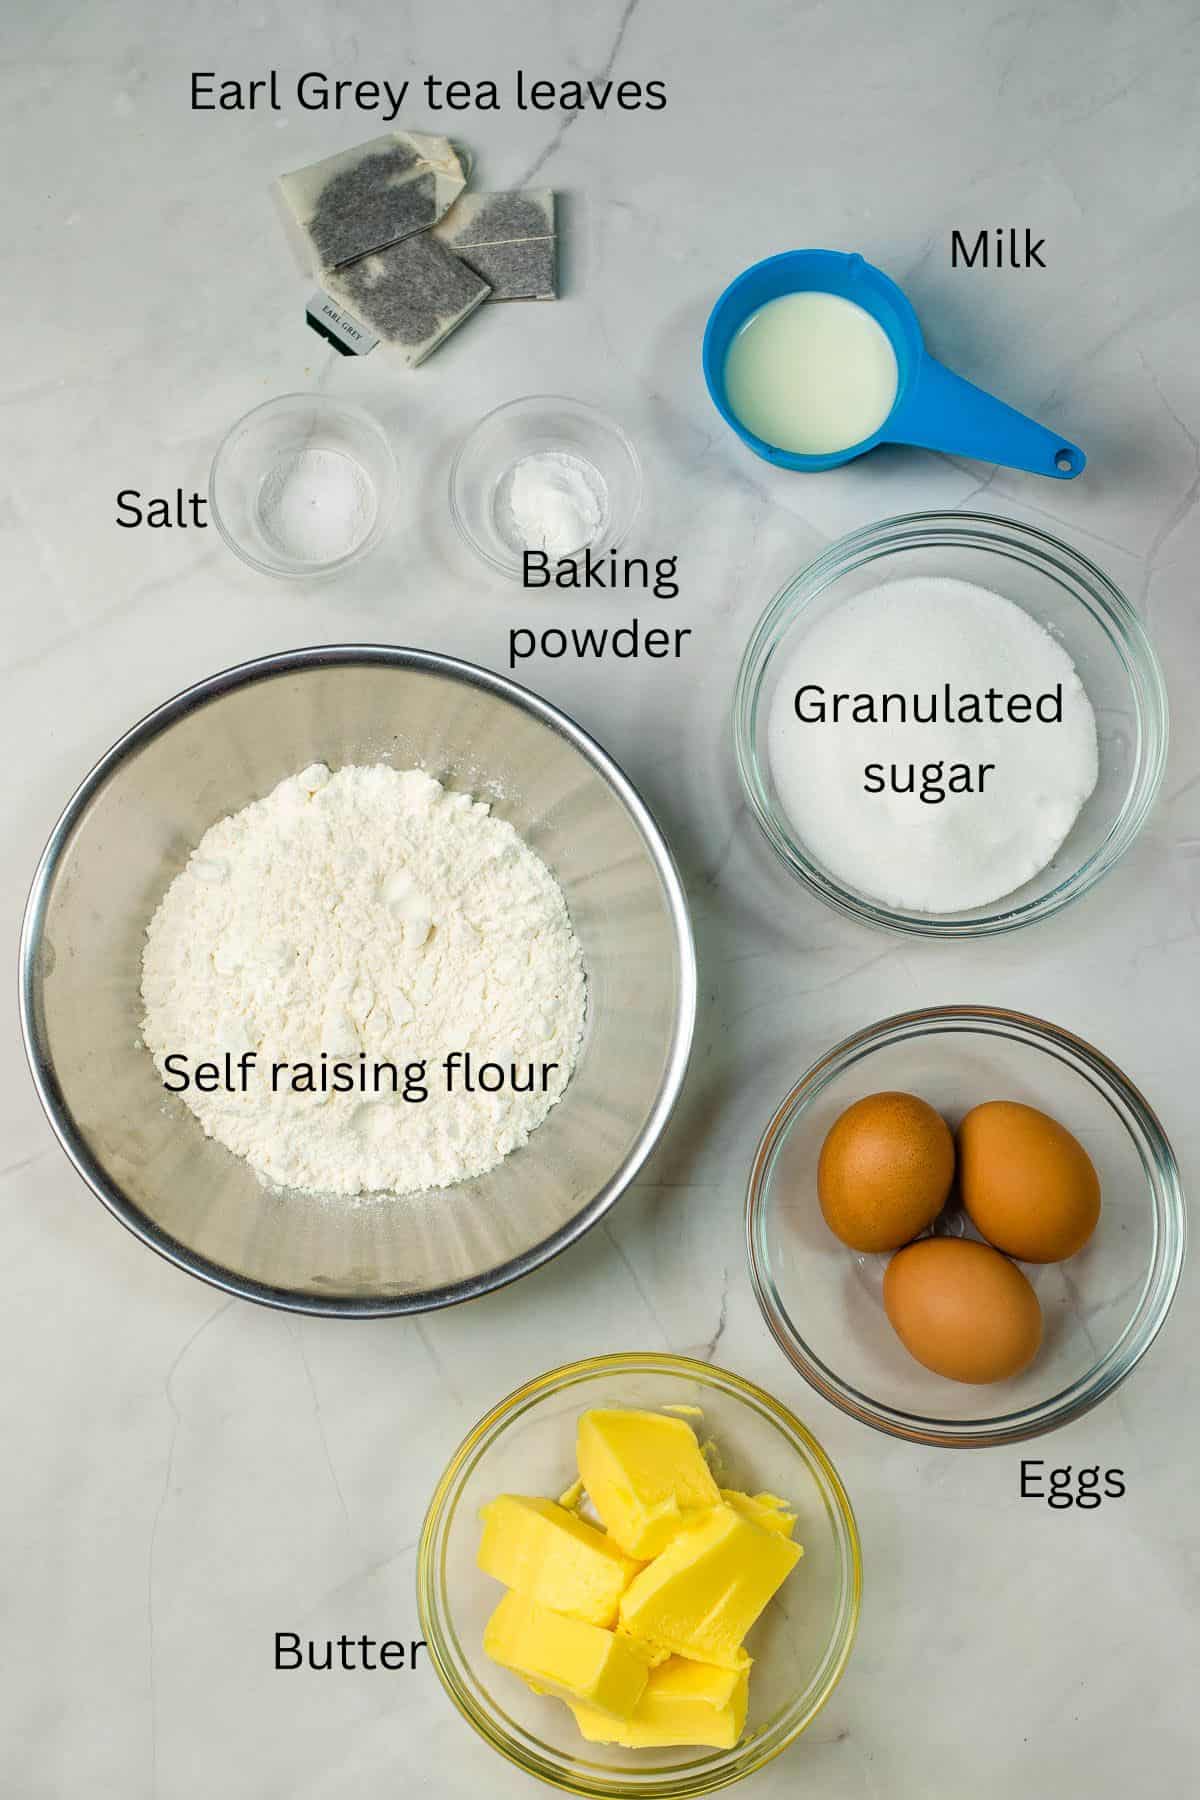 Self raising flour, granulated sugar, butter, eggs, Earl Grey tea bags, salt, baking powder and milk against a marble background.